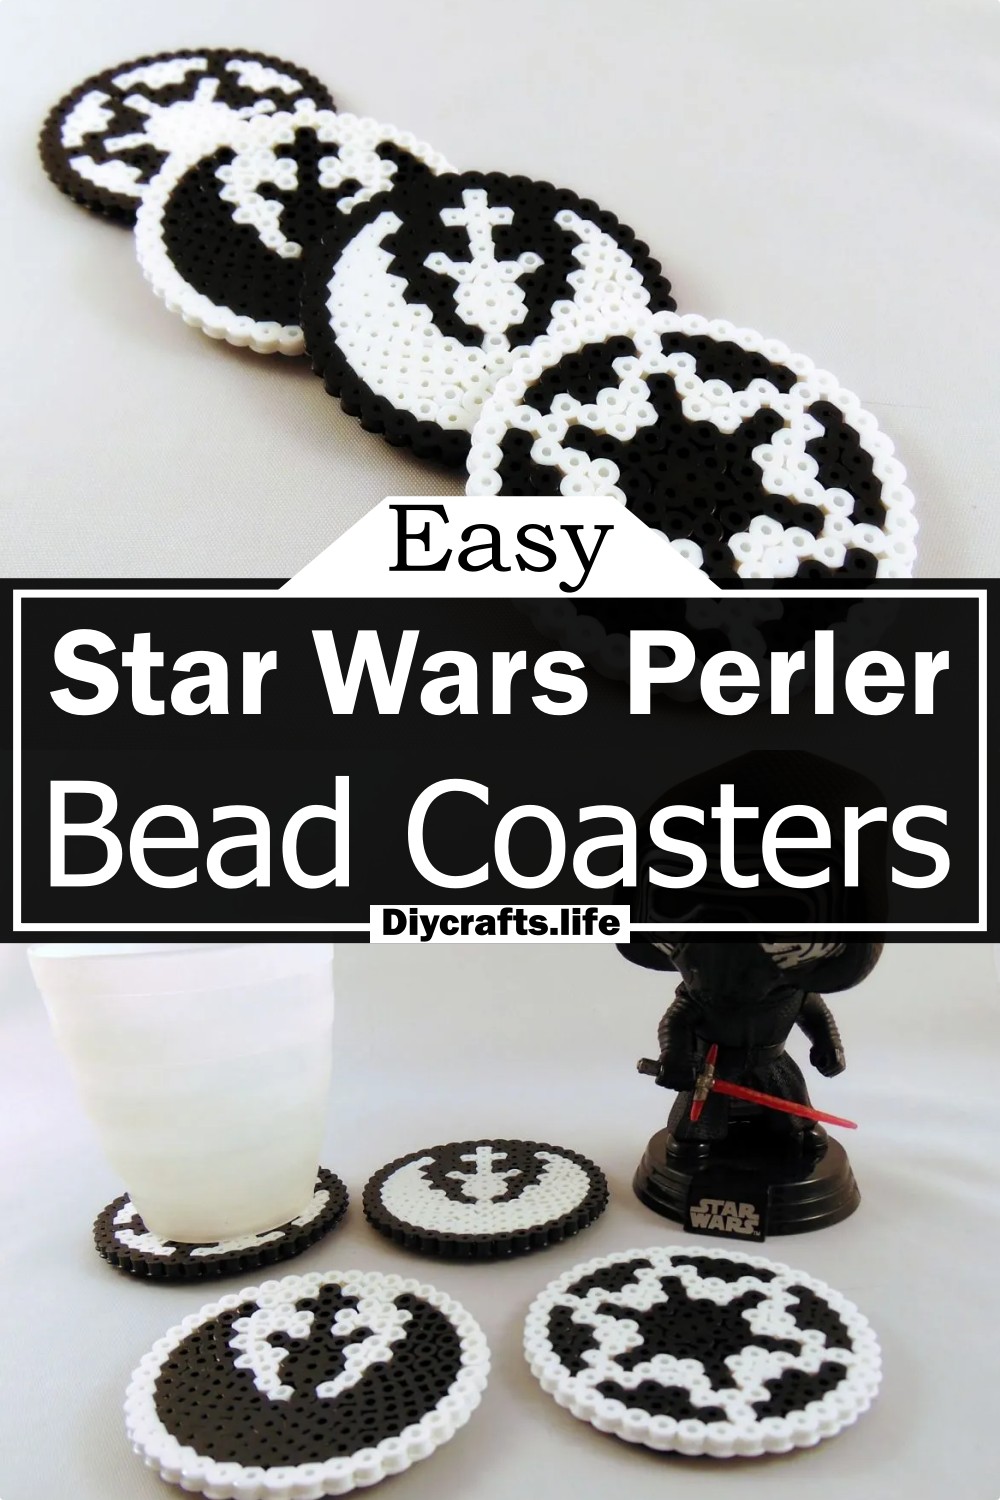 Star Wars Perler Bead Coasters